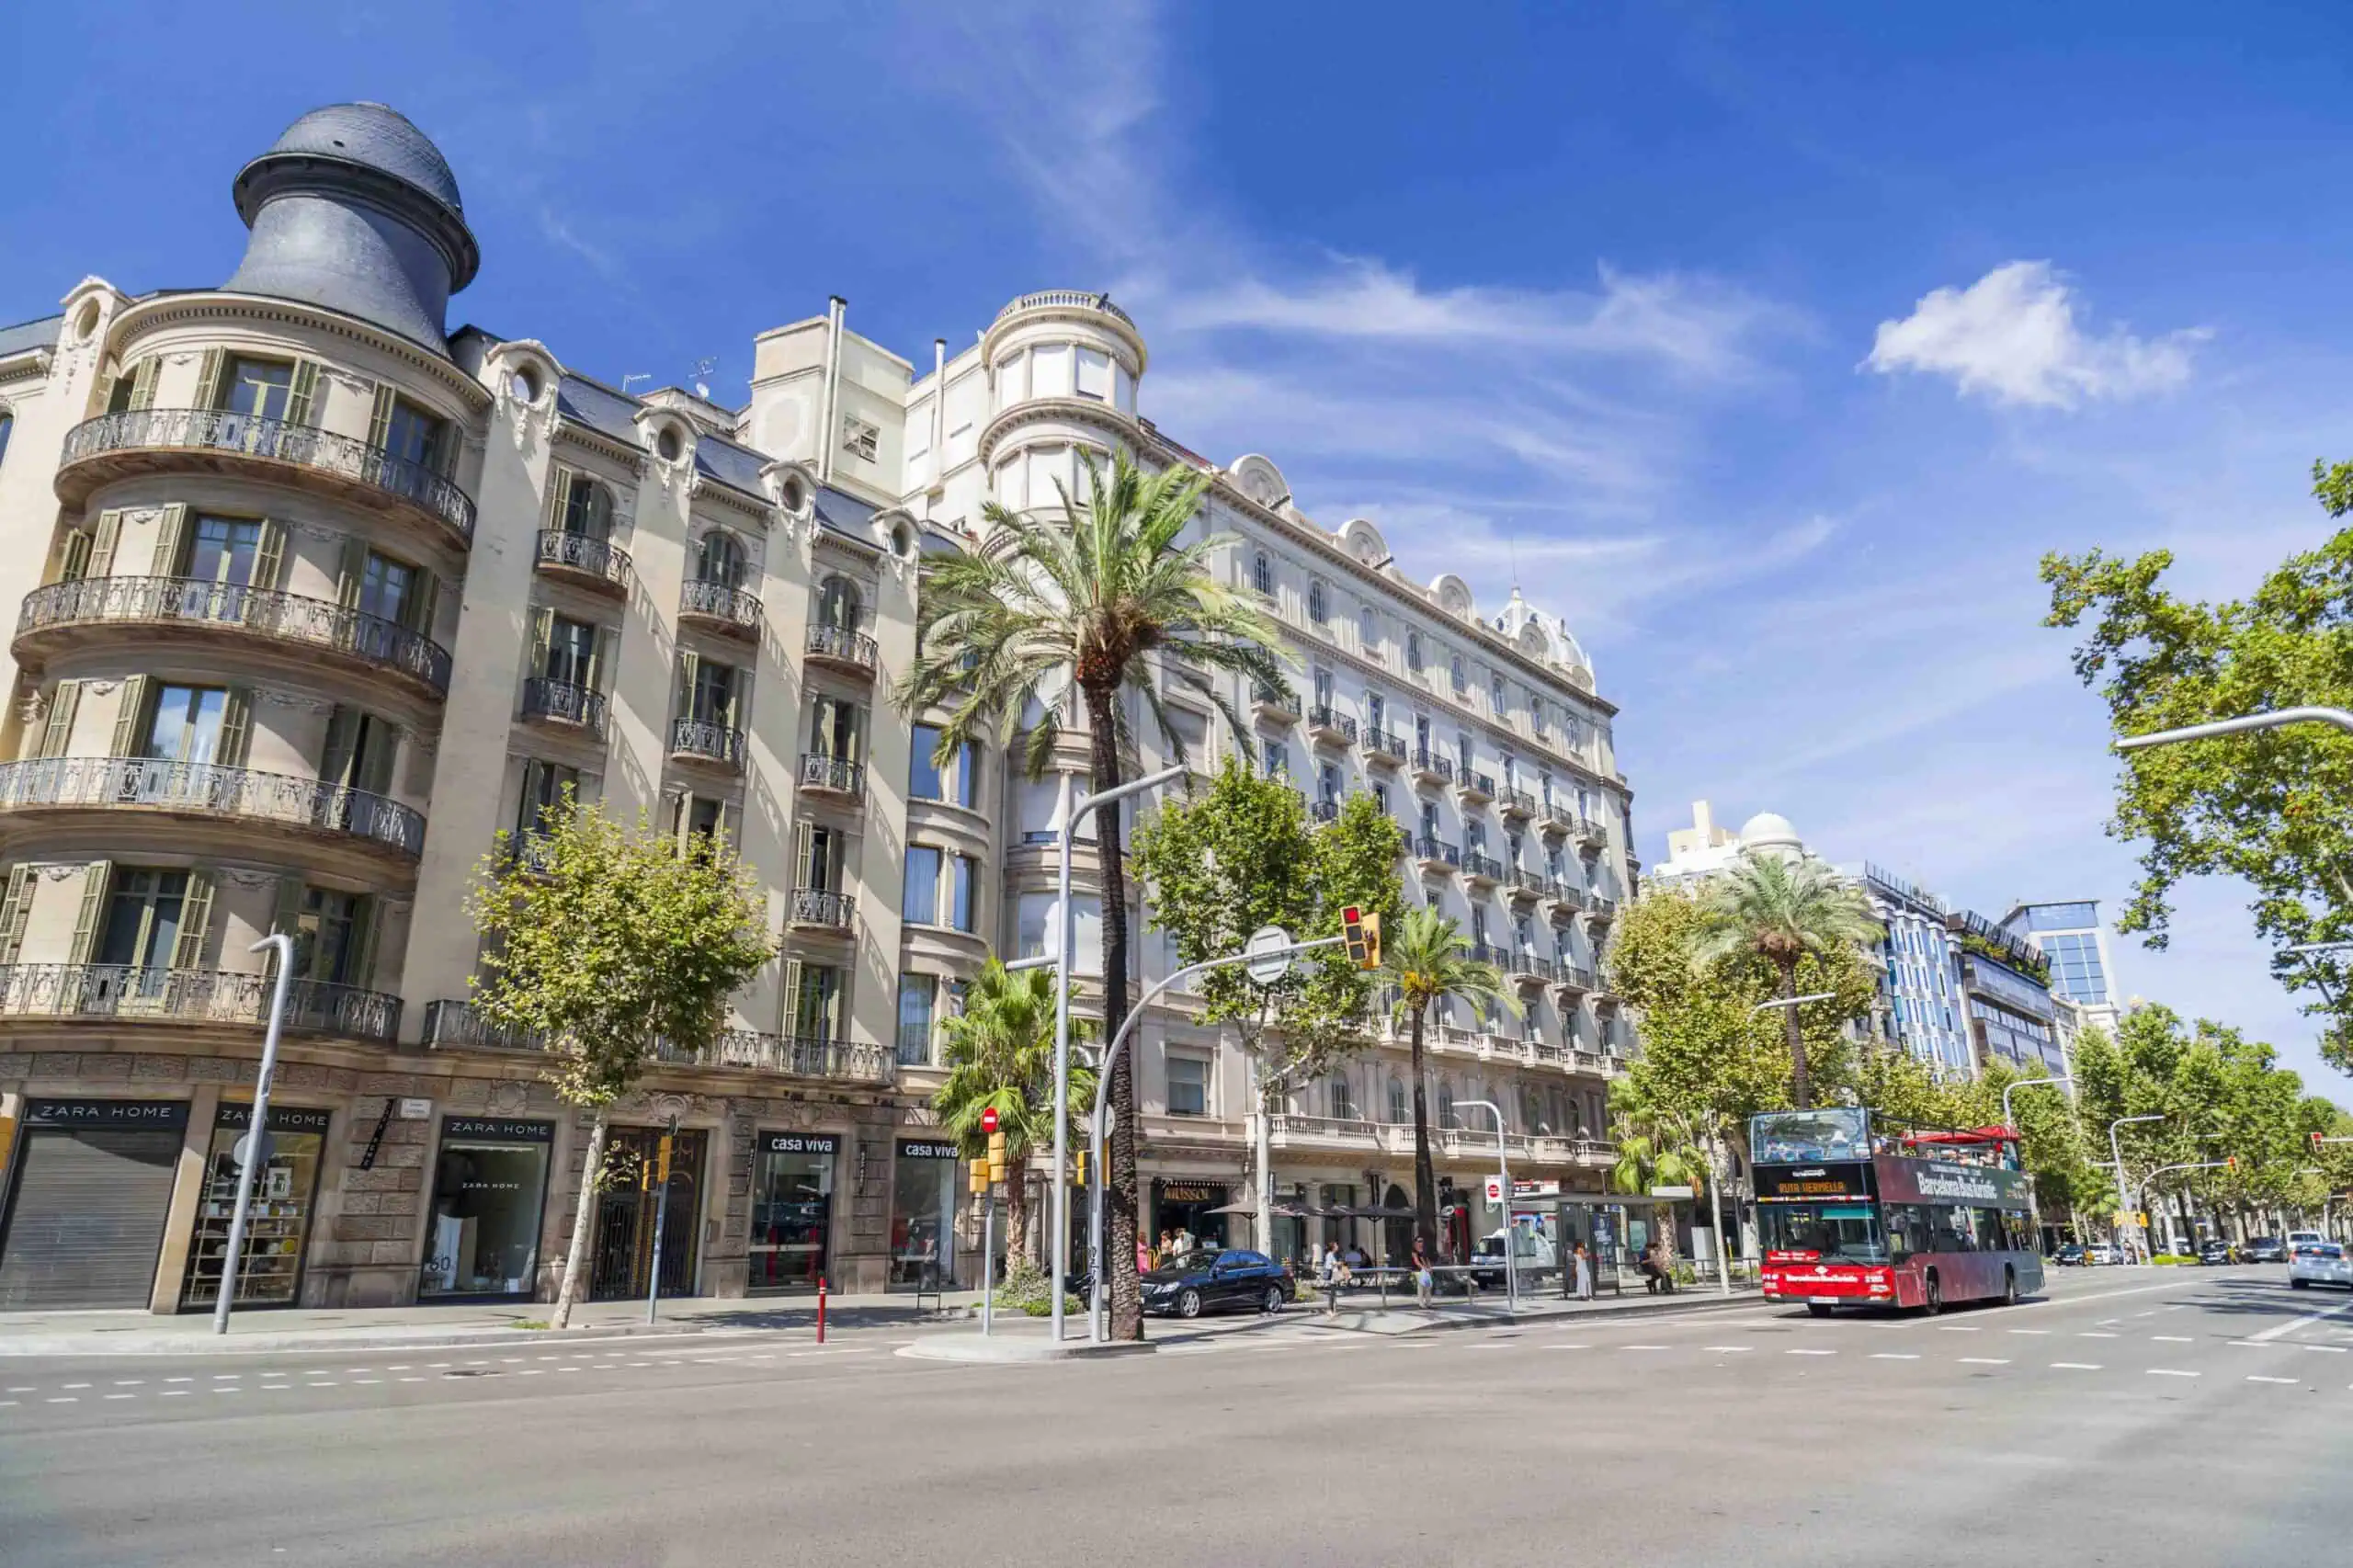 Street view on Diagonal avenue in Barcelona.